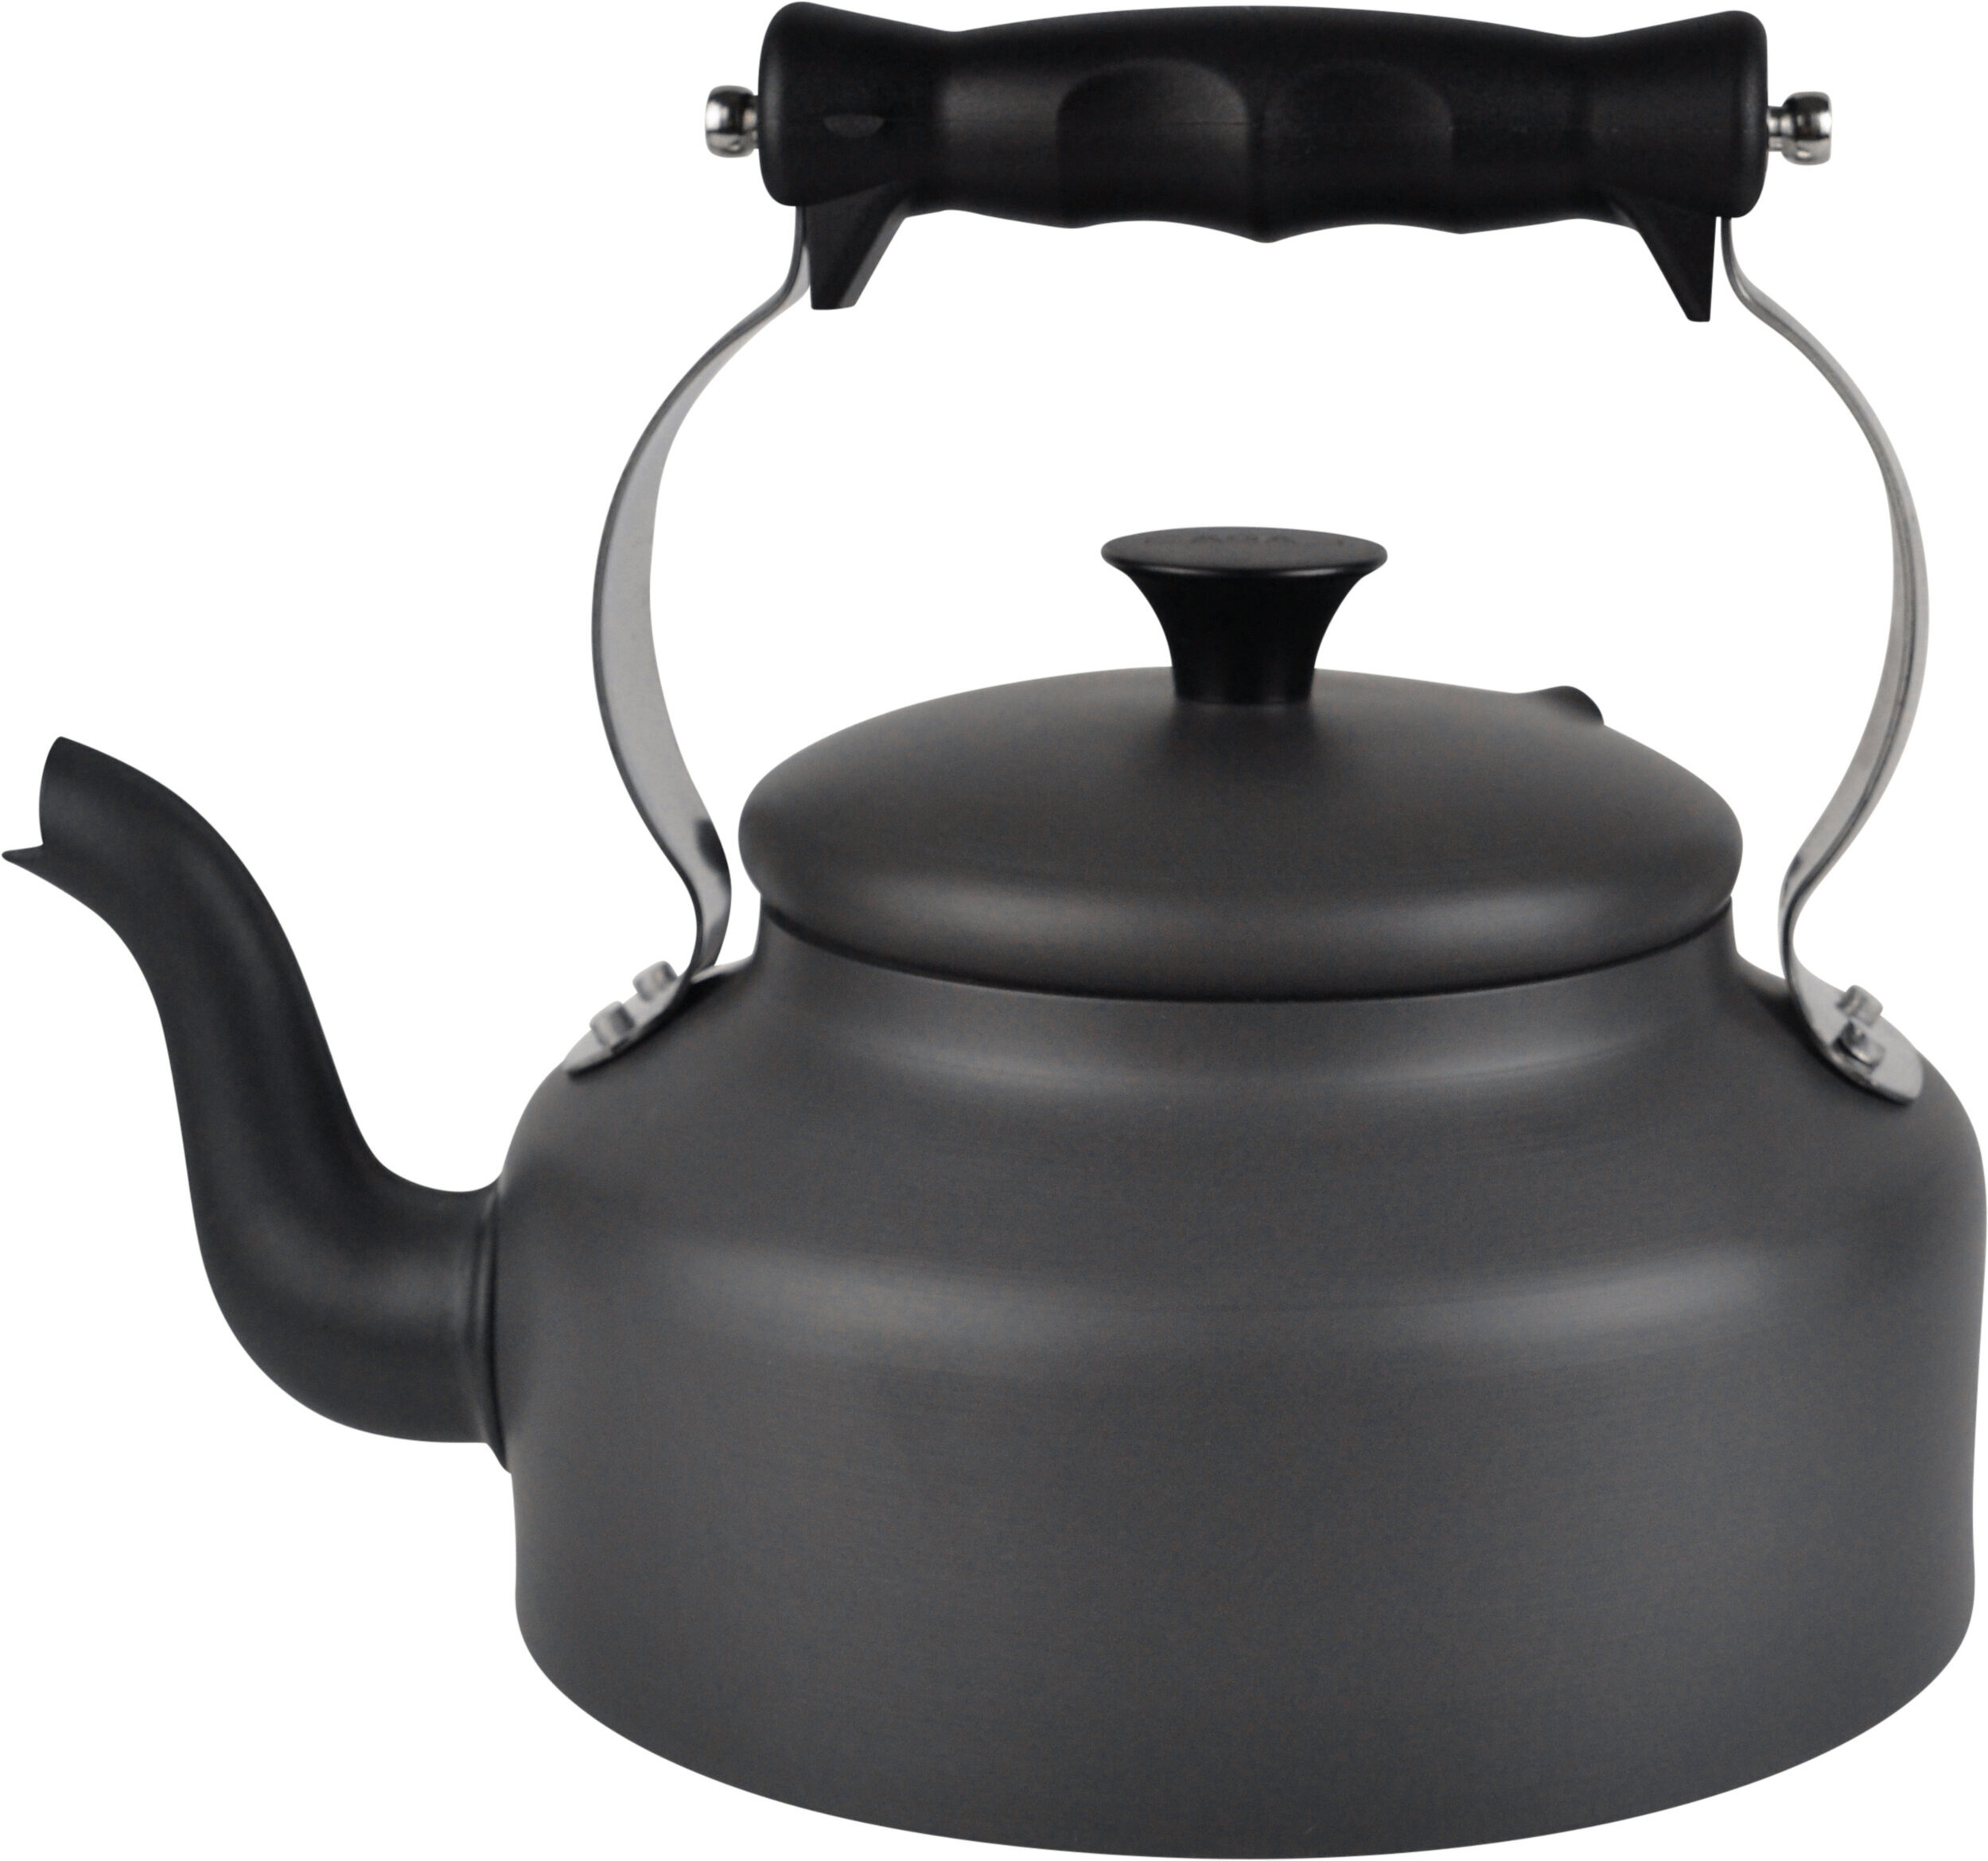 Pot kettle black